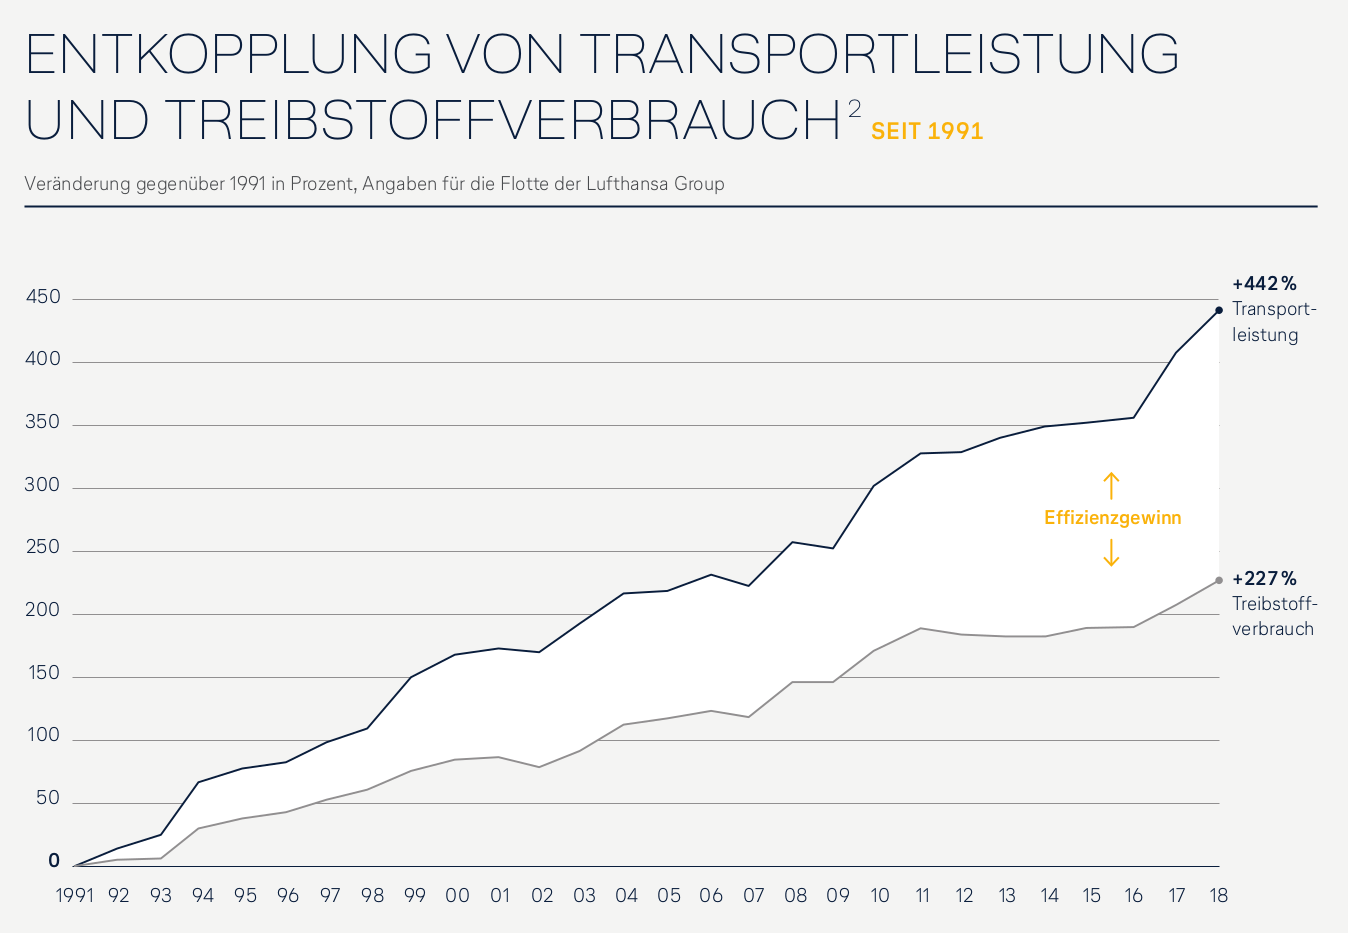 Lufthansa not decoupling